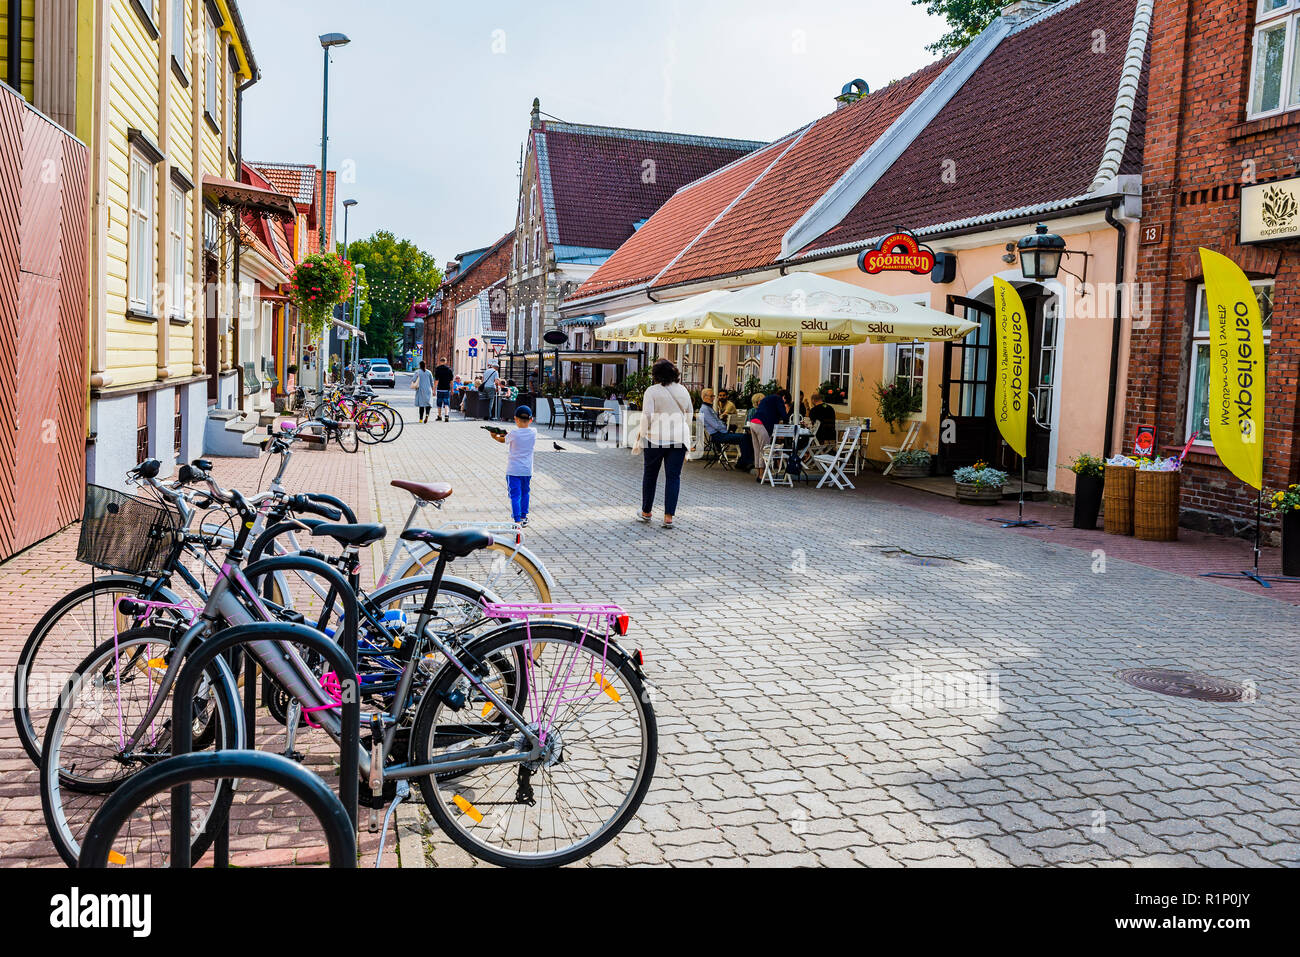 he ultimate summer holiday destination in Estonia. Street of Parnu - Pärnu - , Pärnu County, Estonia, Baltic states, Europe. Stock Photo